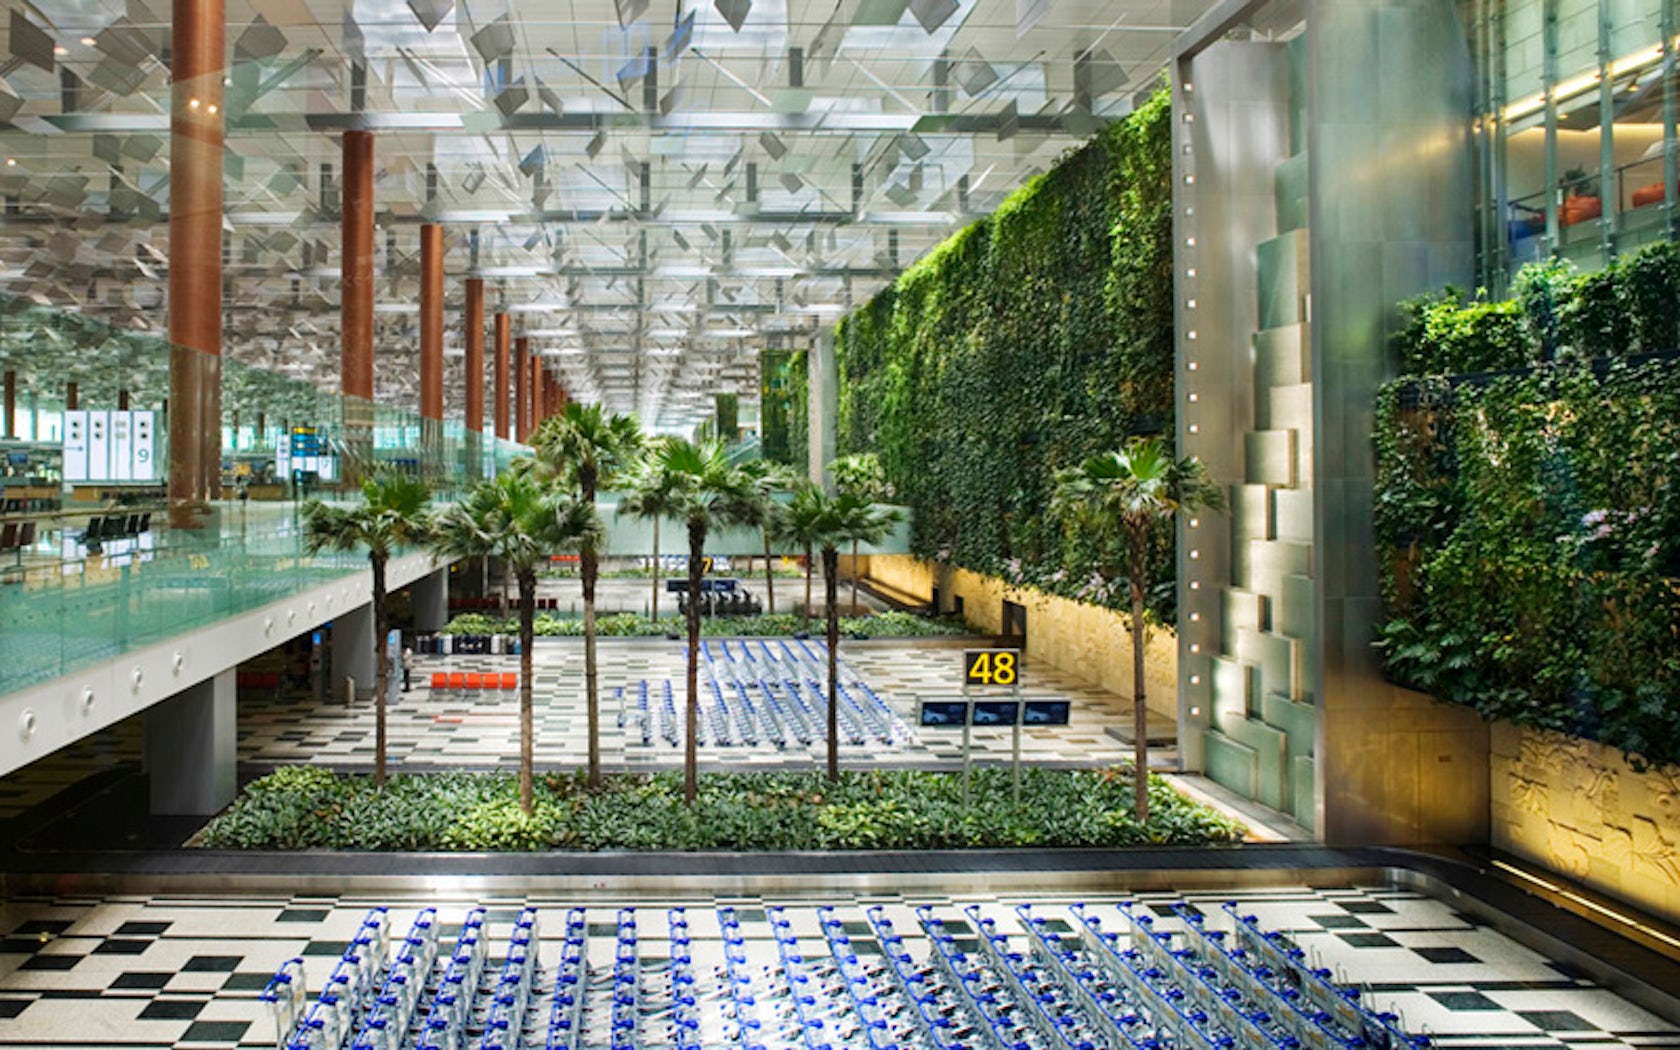 Changi Airport - Terminal 3  Architecture, Changi, Singapore changi airport